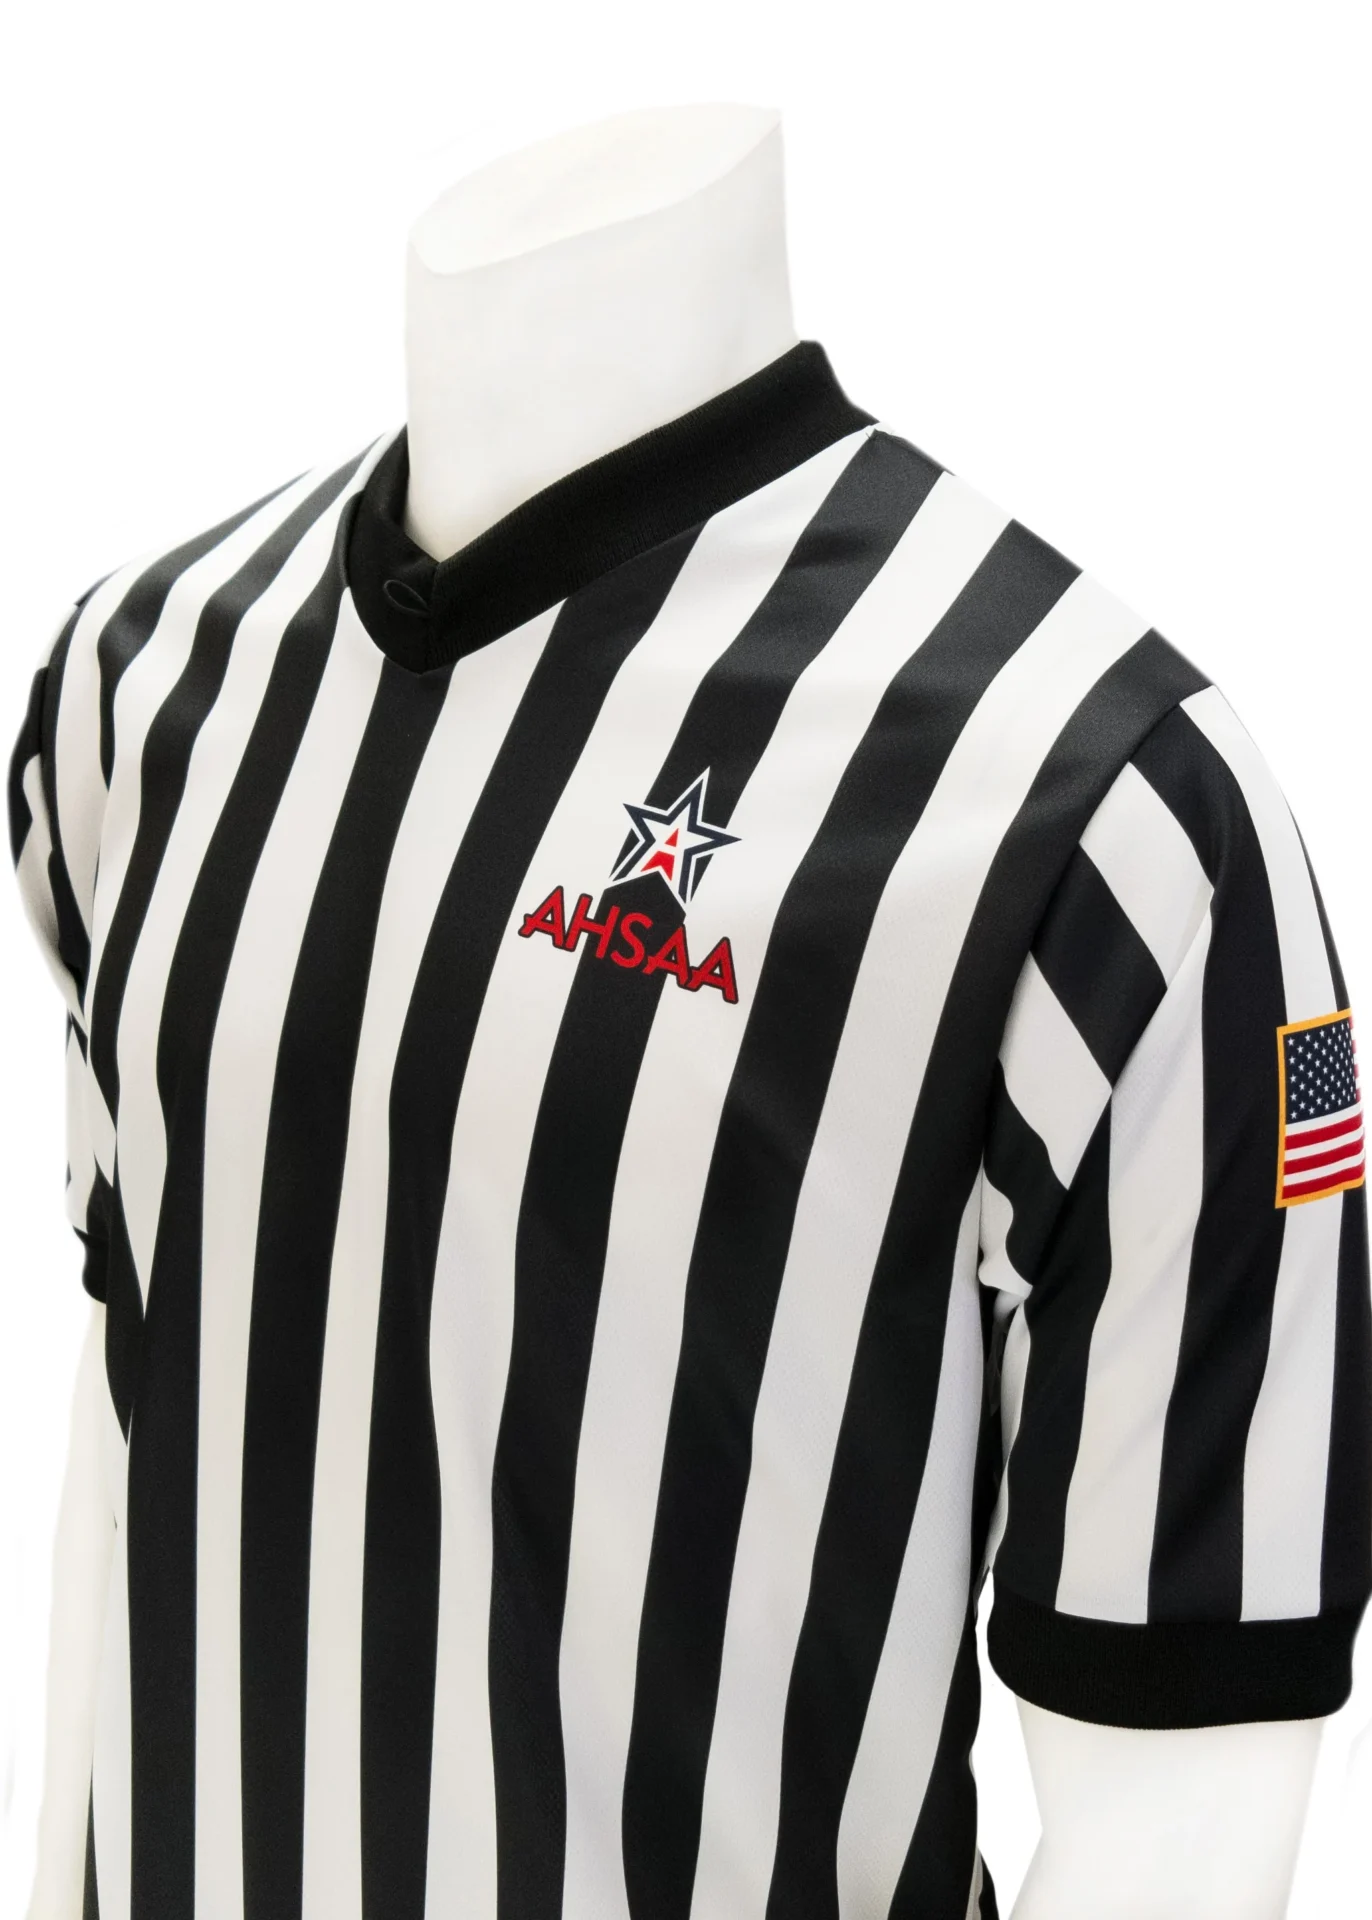 USA200 Alabama Basketball Men's Short Sleeve Shirt